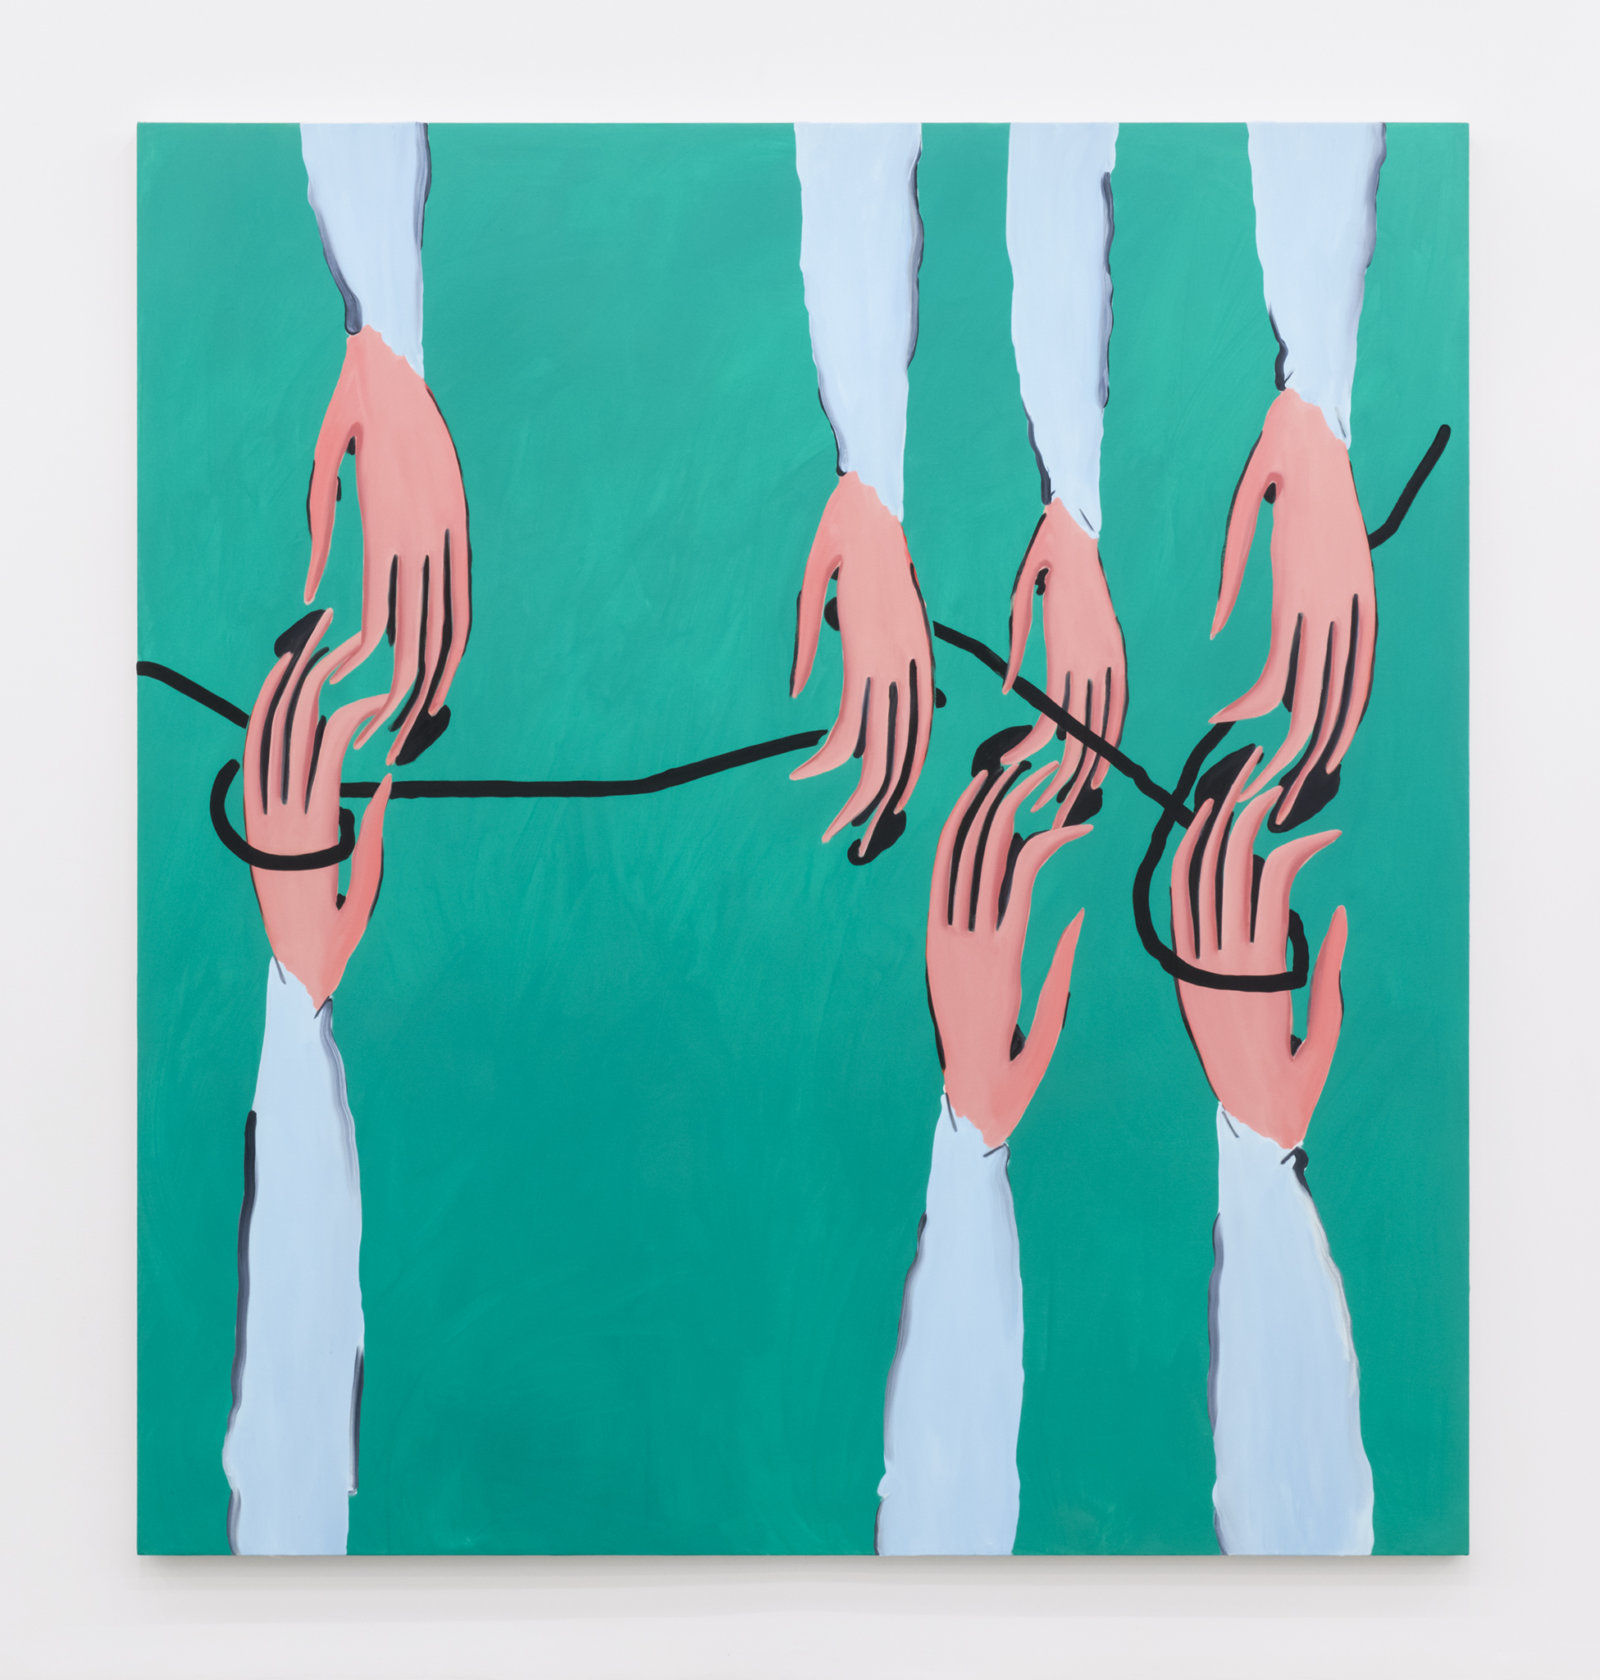 Elizabeth McIntosh, Green In, 2017, flashe and oil on canvas, 82 x 88 in. (207 x 222 cm) 